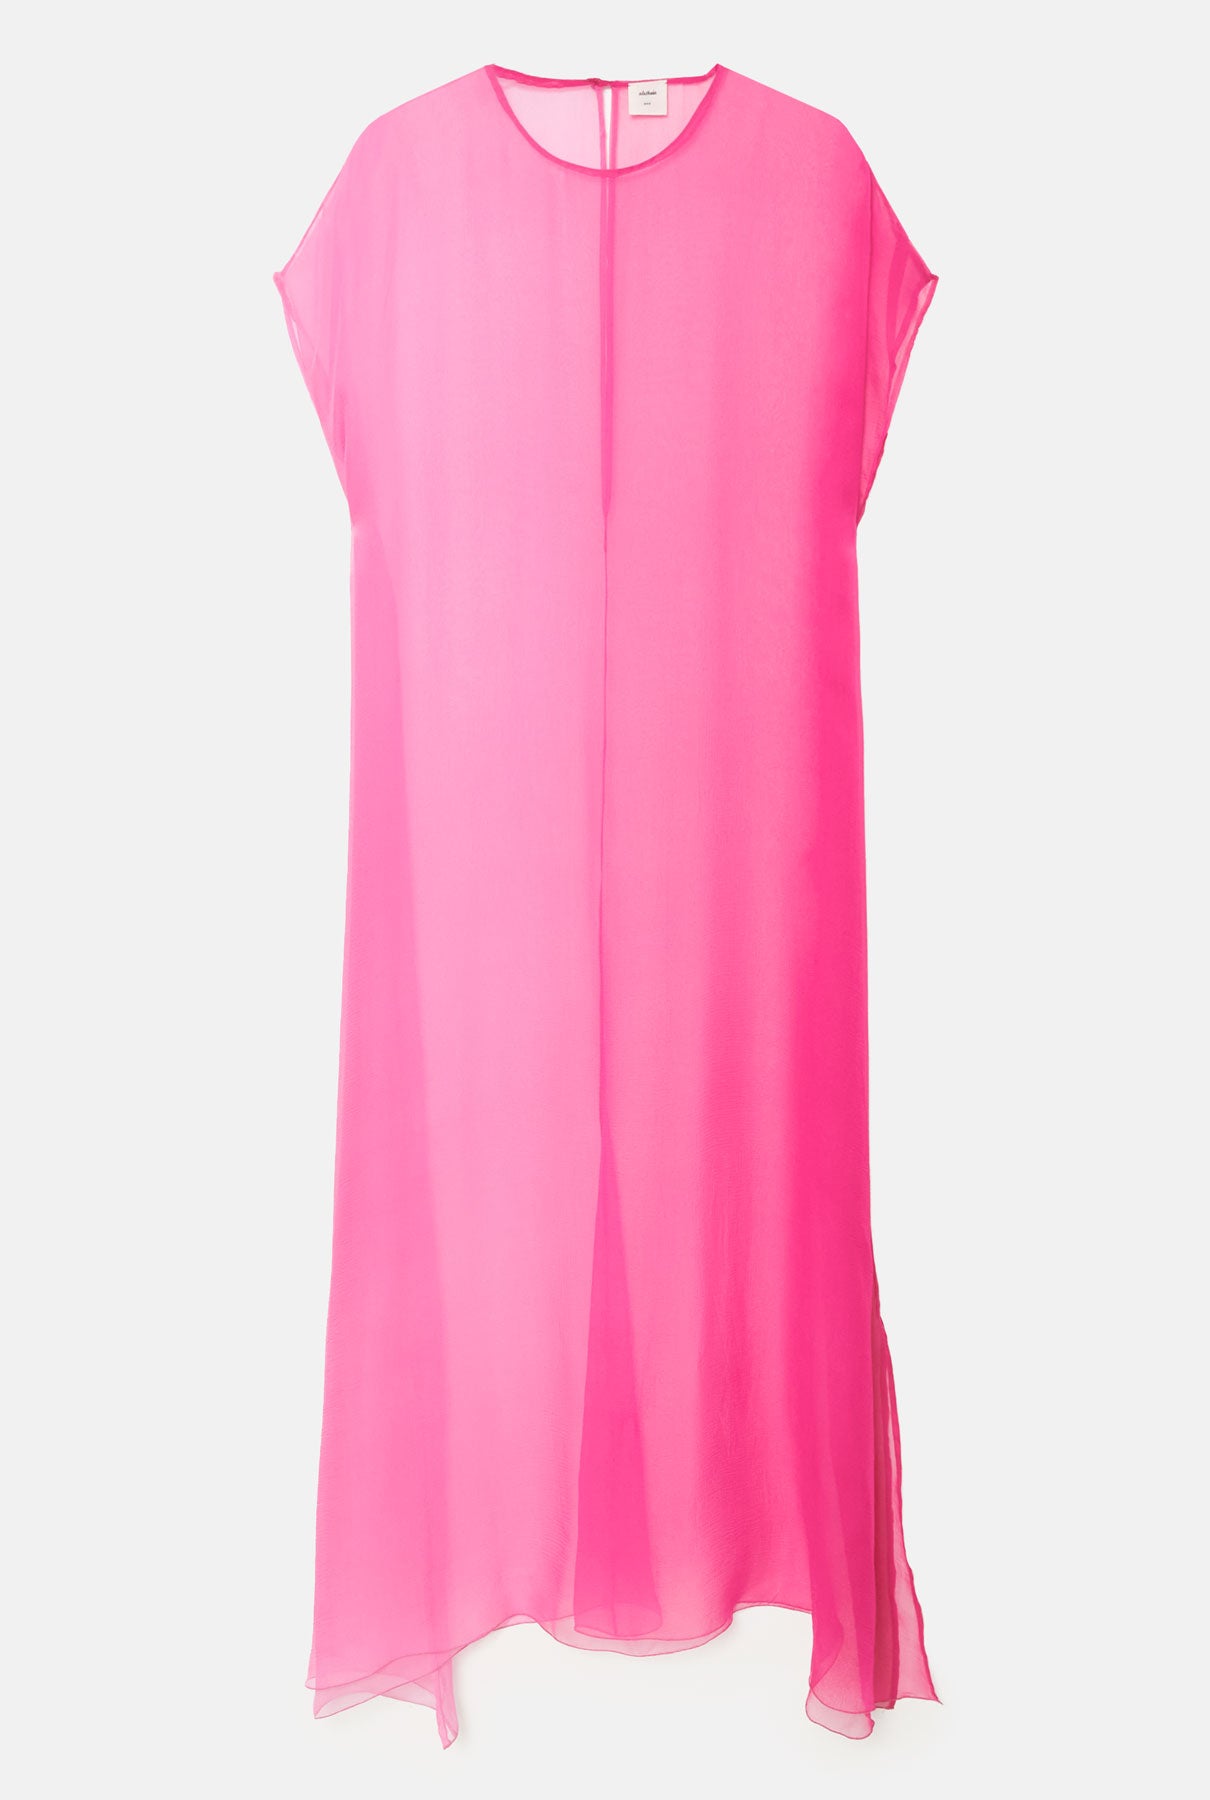 Semi-transparent pink overdress Dresses Atelier Aletheia 